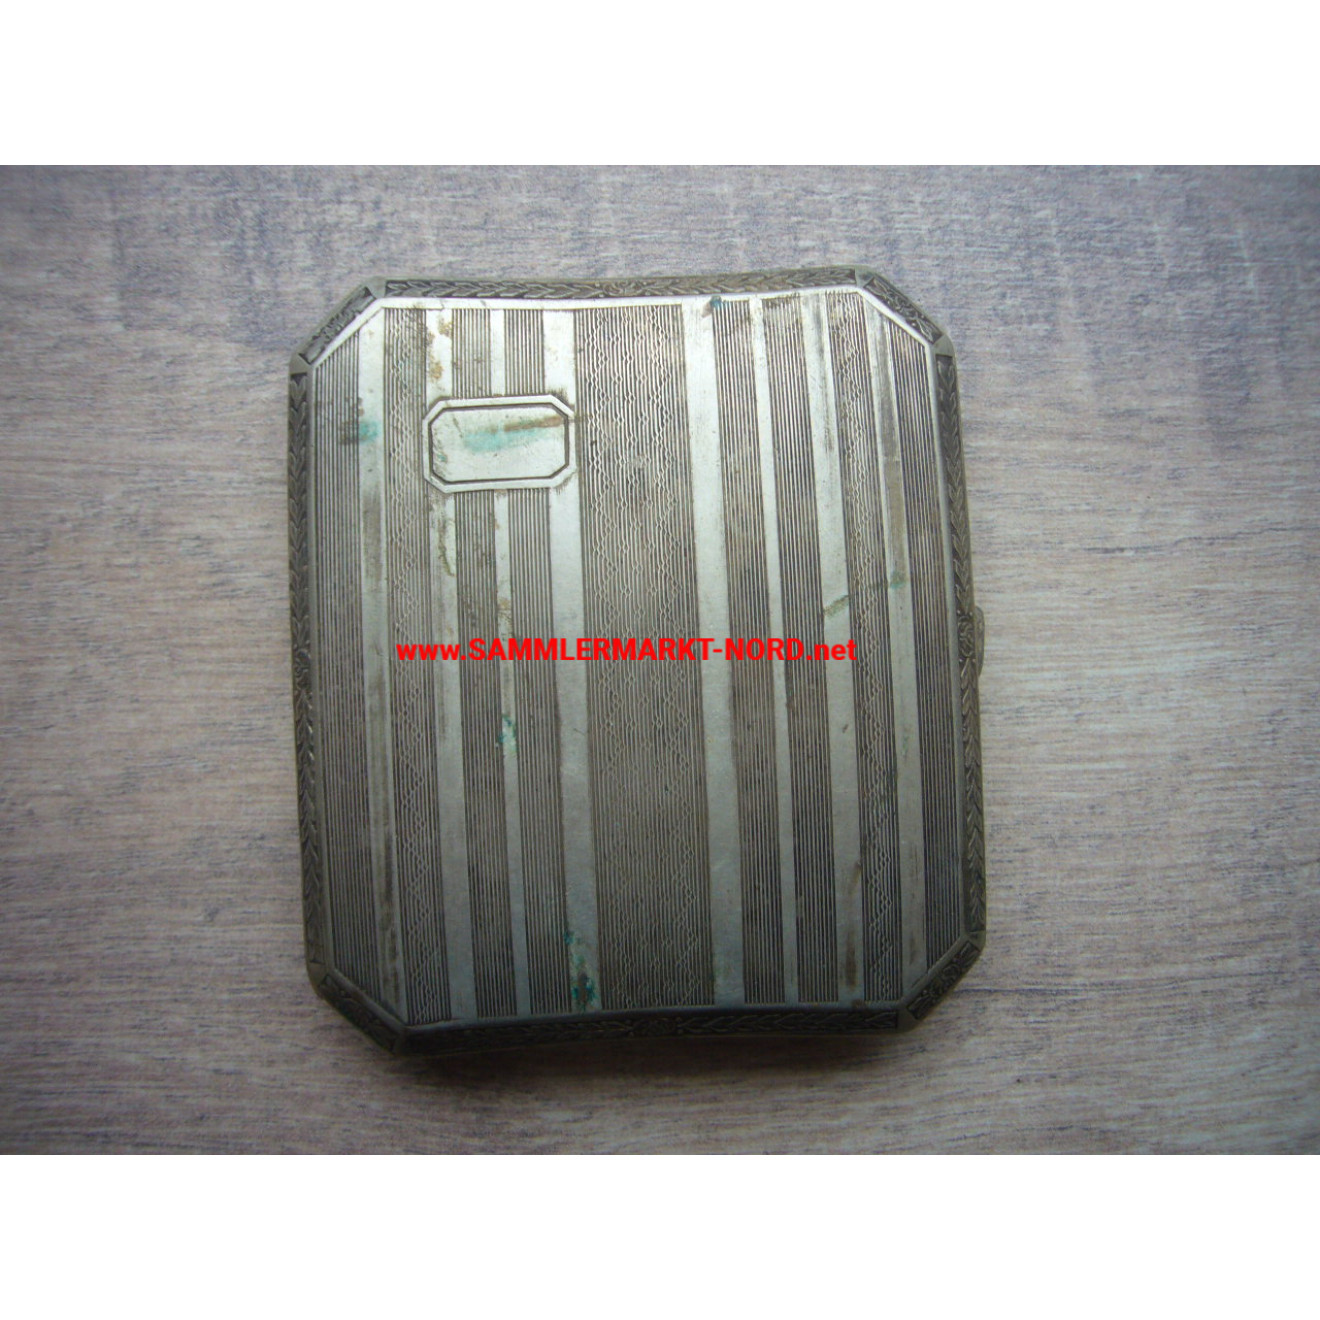 Wehrmacht - Marketender - Cigarette case (silver plated)